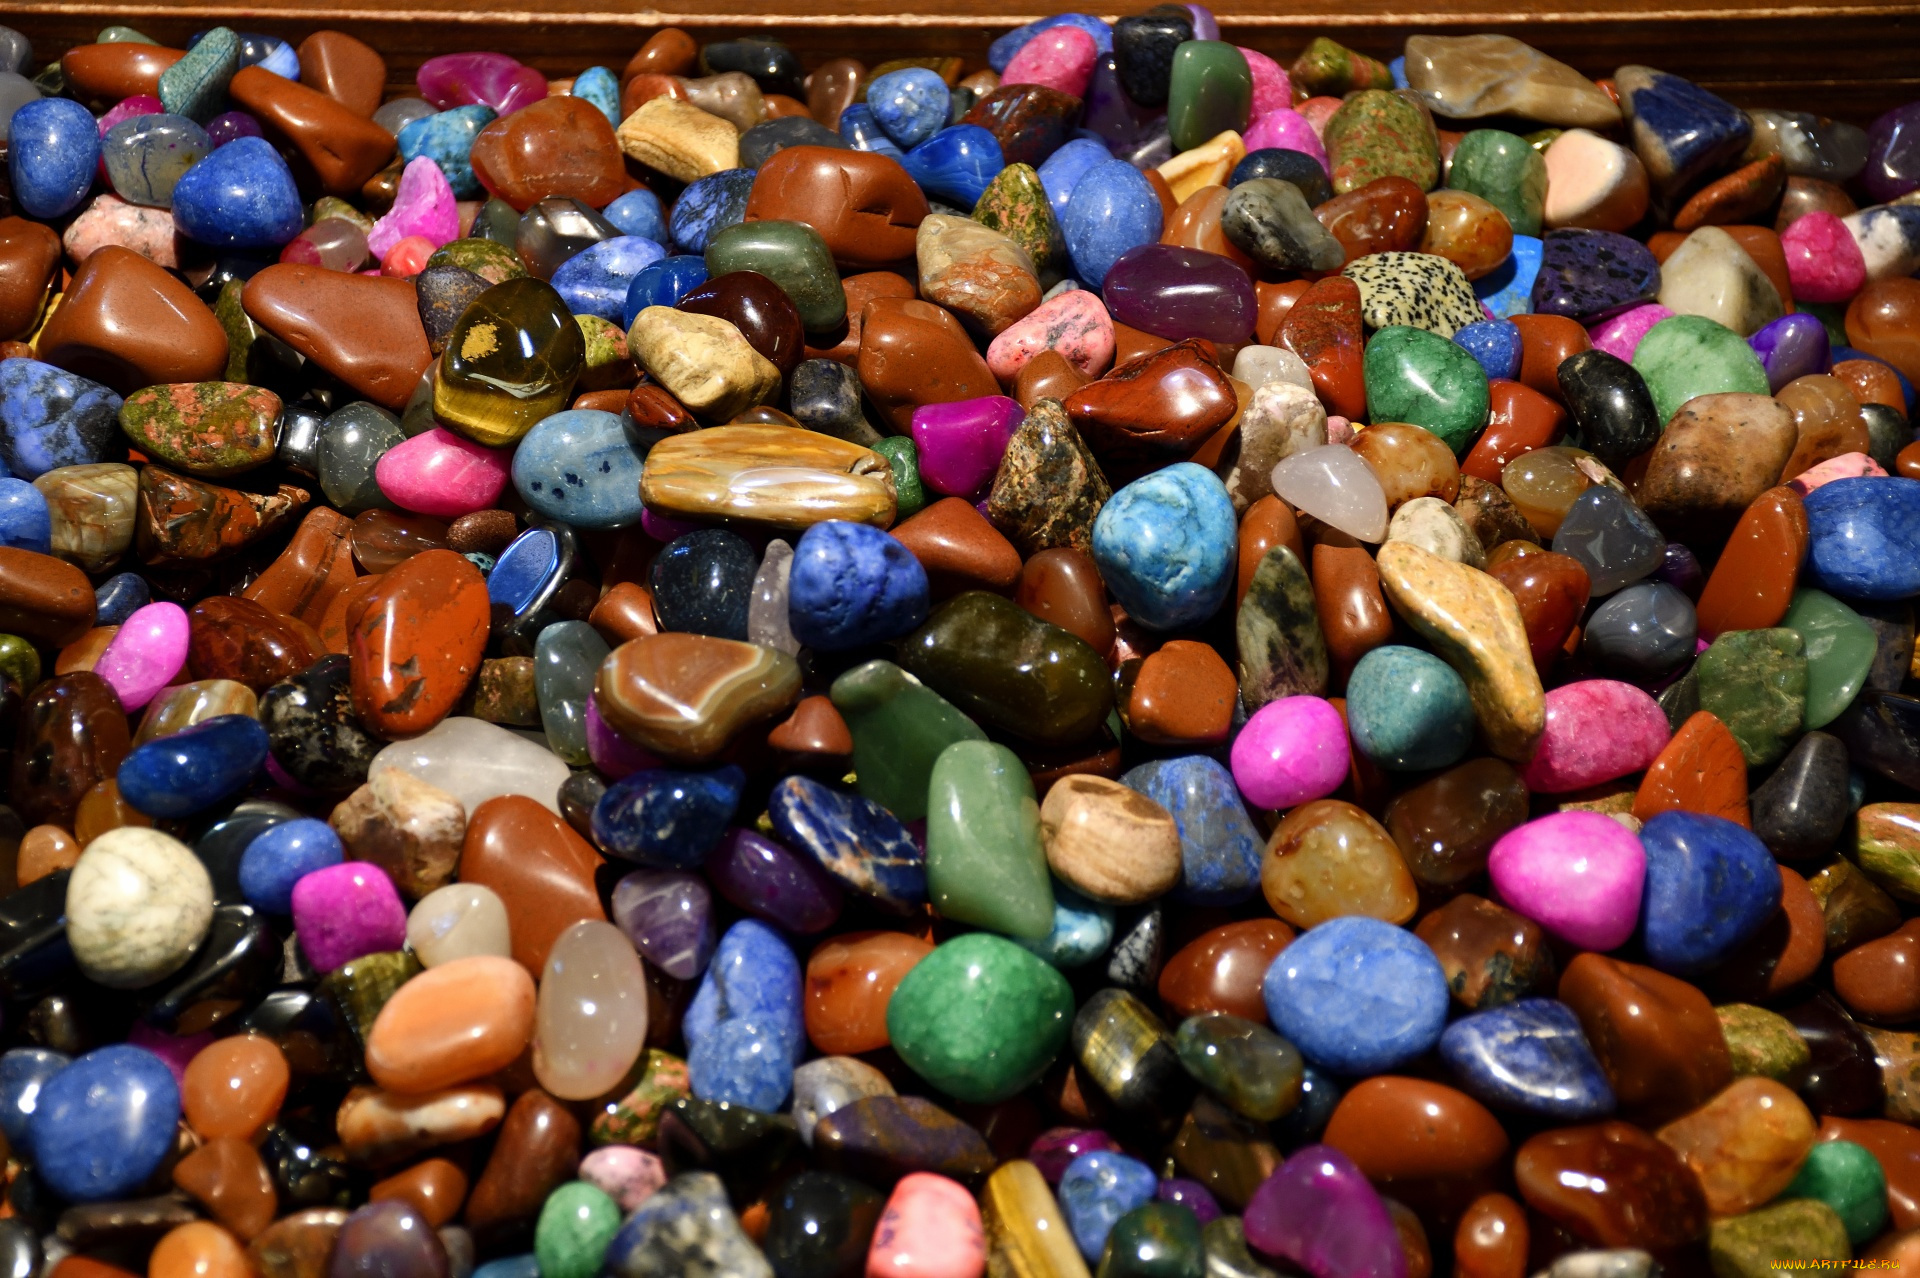 разное, ракушки, , кораллы, , декоративные, и, spa-камни, разноцветные, камешки, много